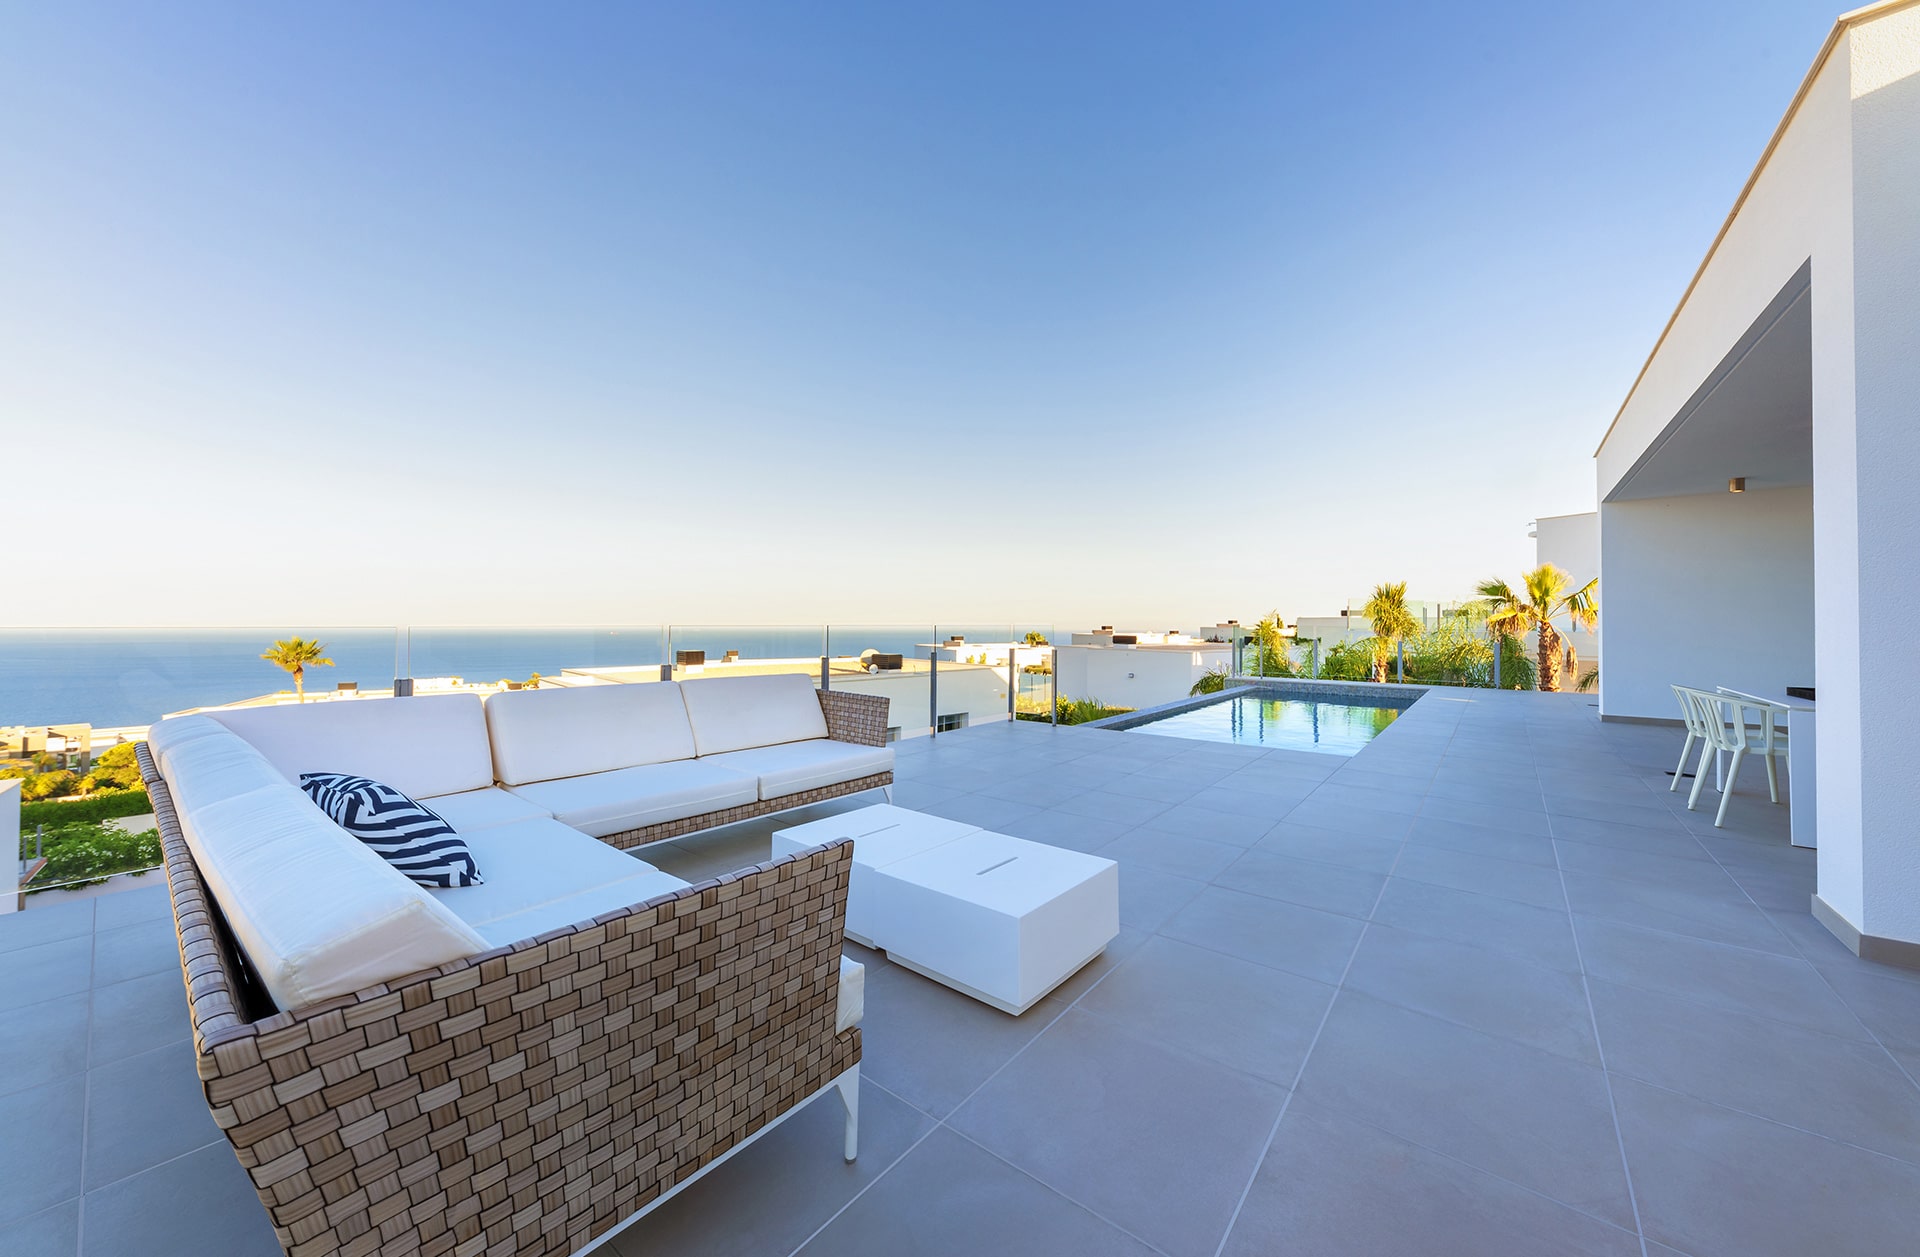 Our home at Residential Resort Cumbre del Sol will make those dreams come true.